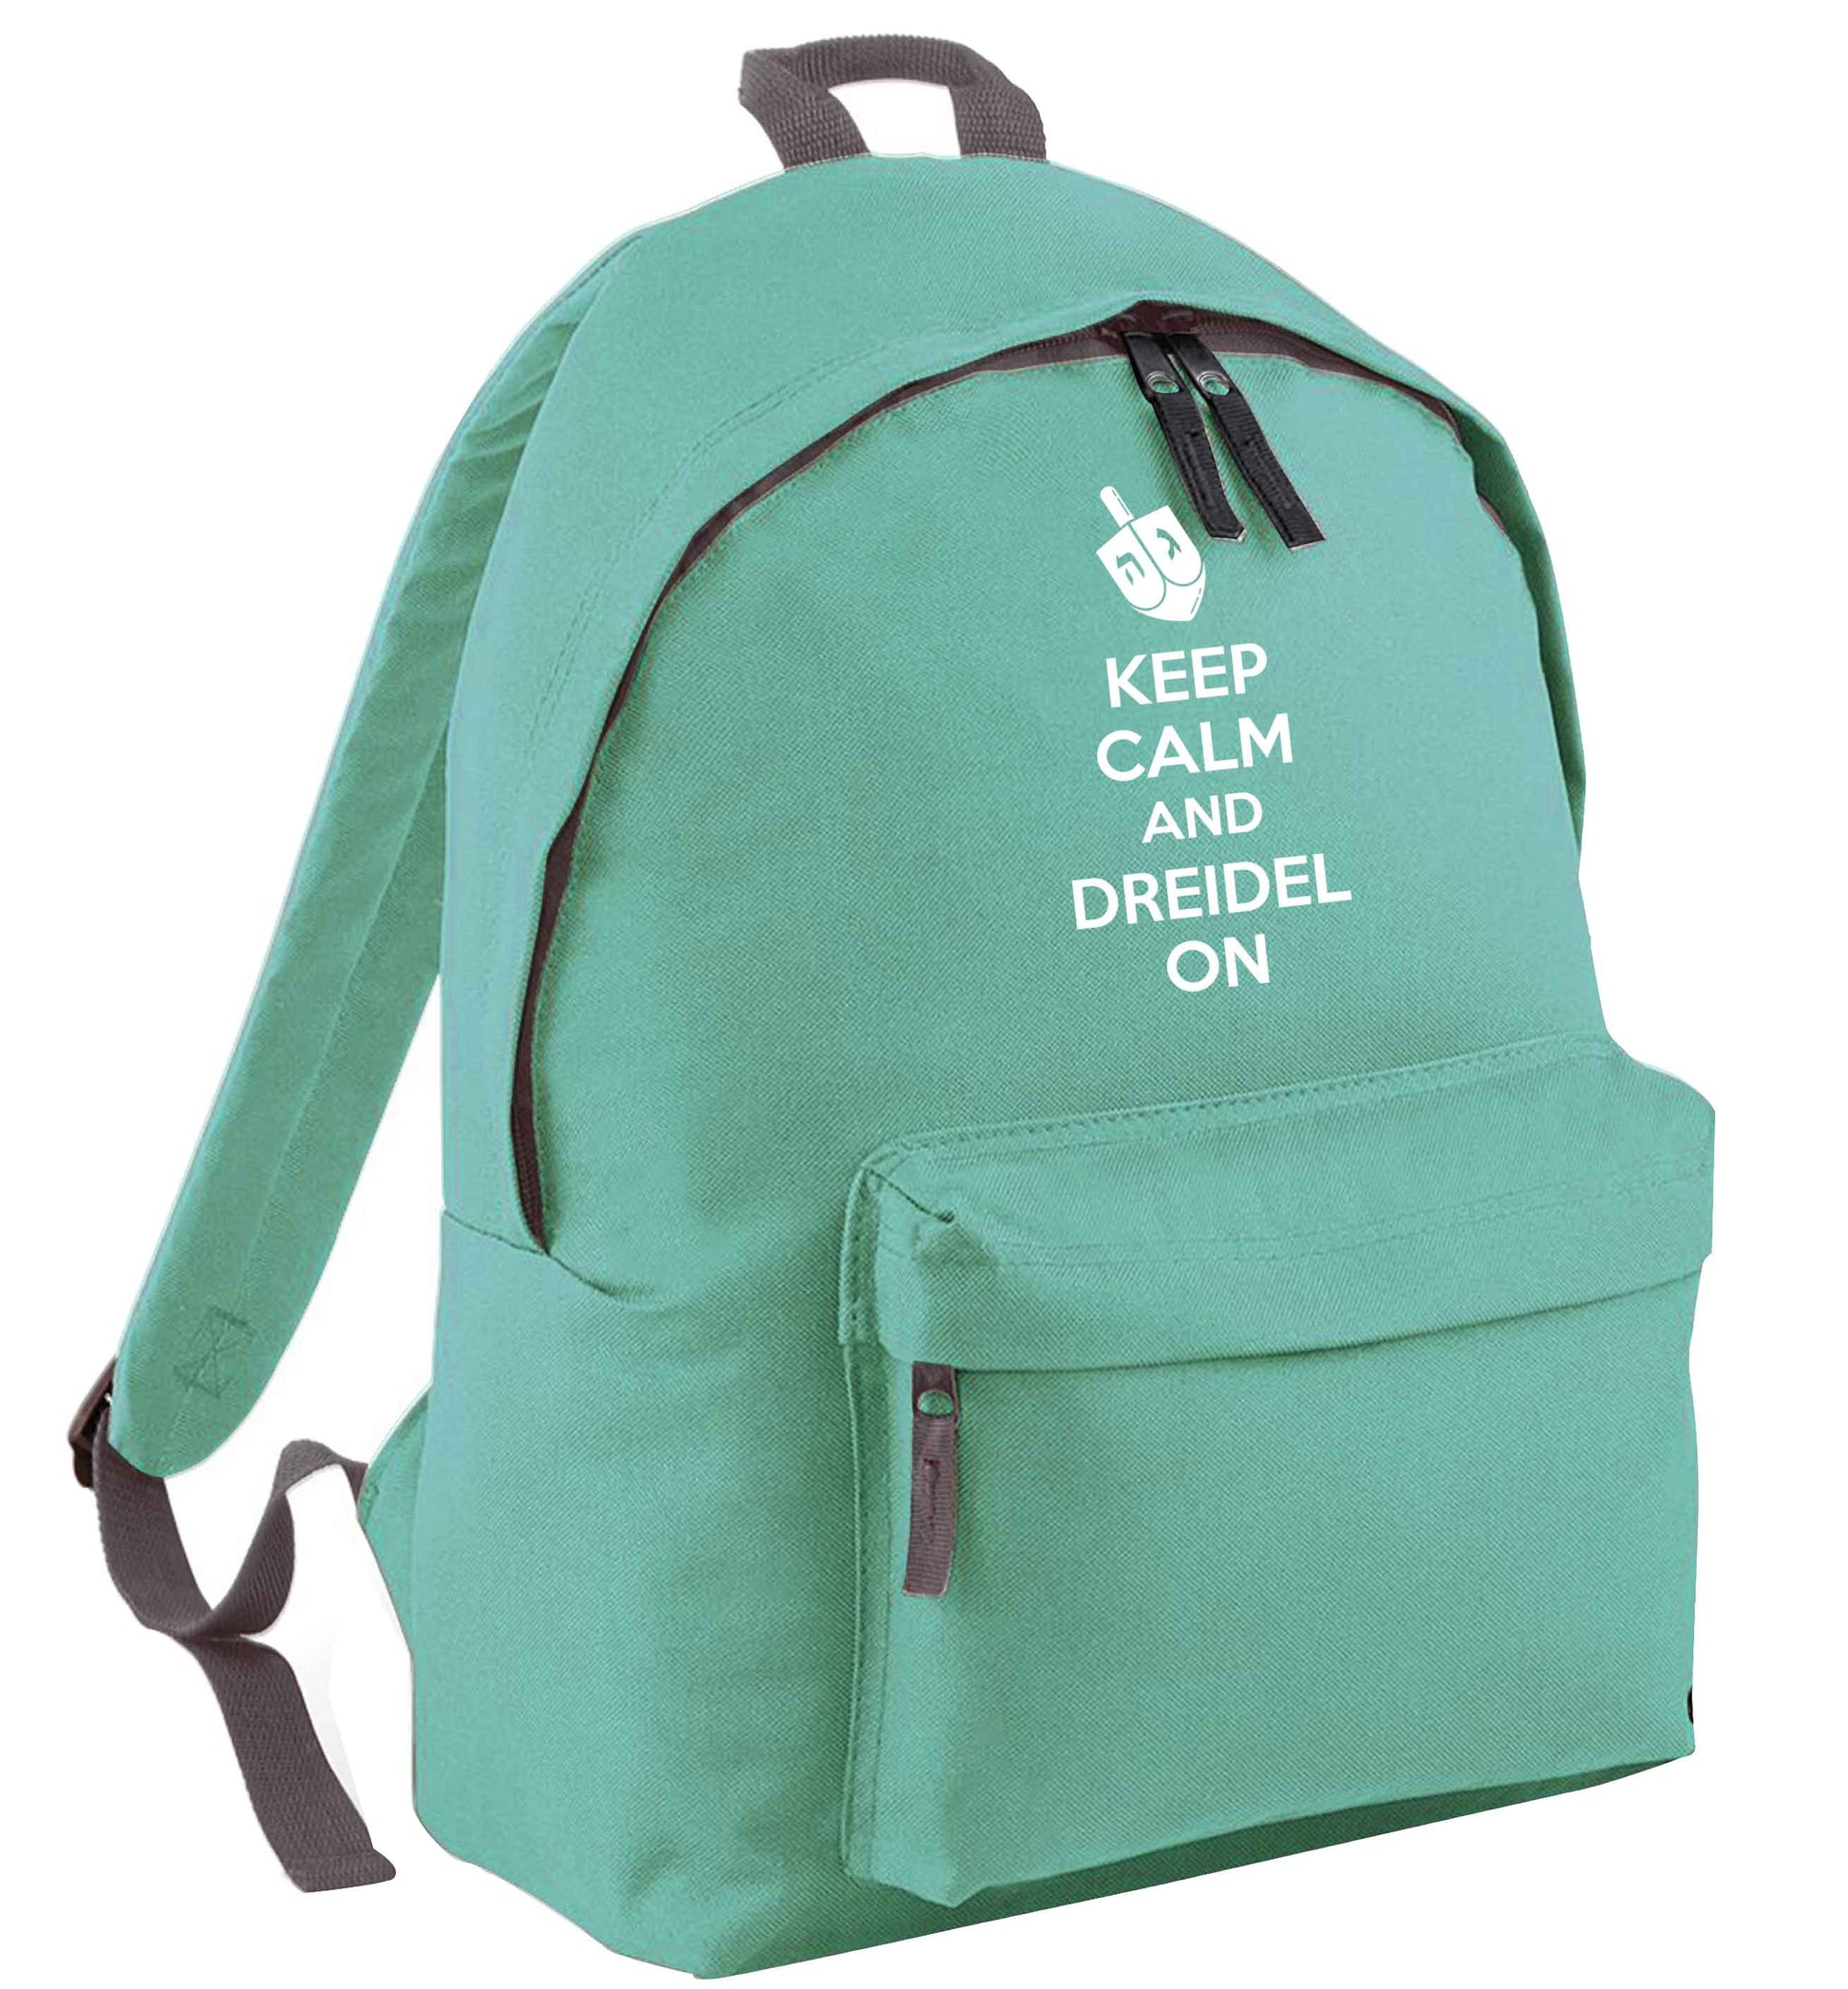 Keep calm and dreidel on mint adults backpack